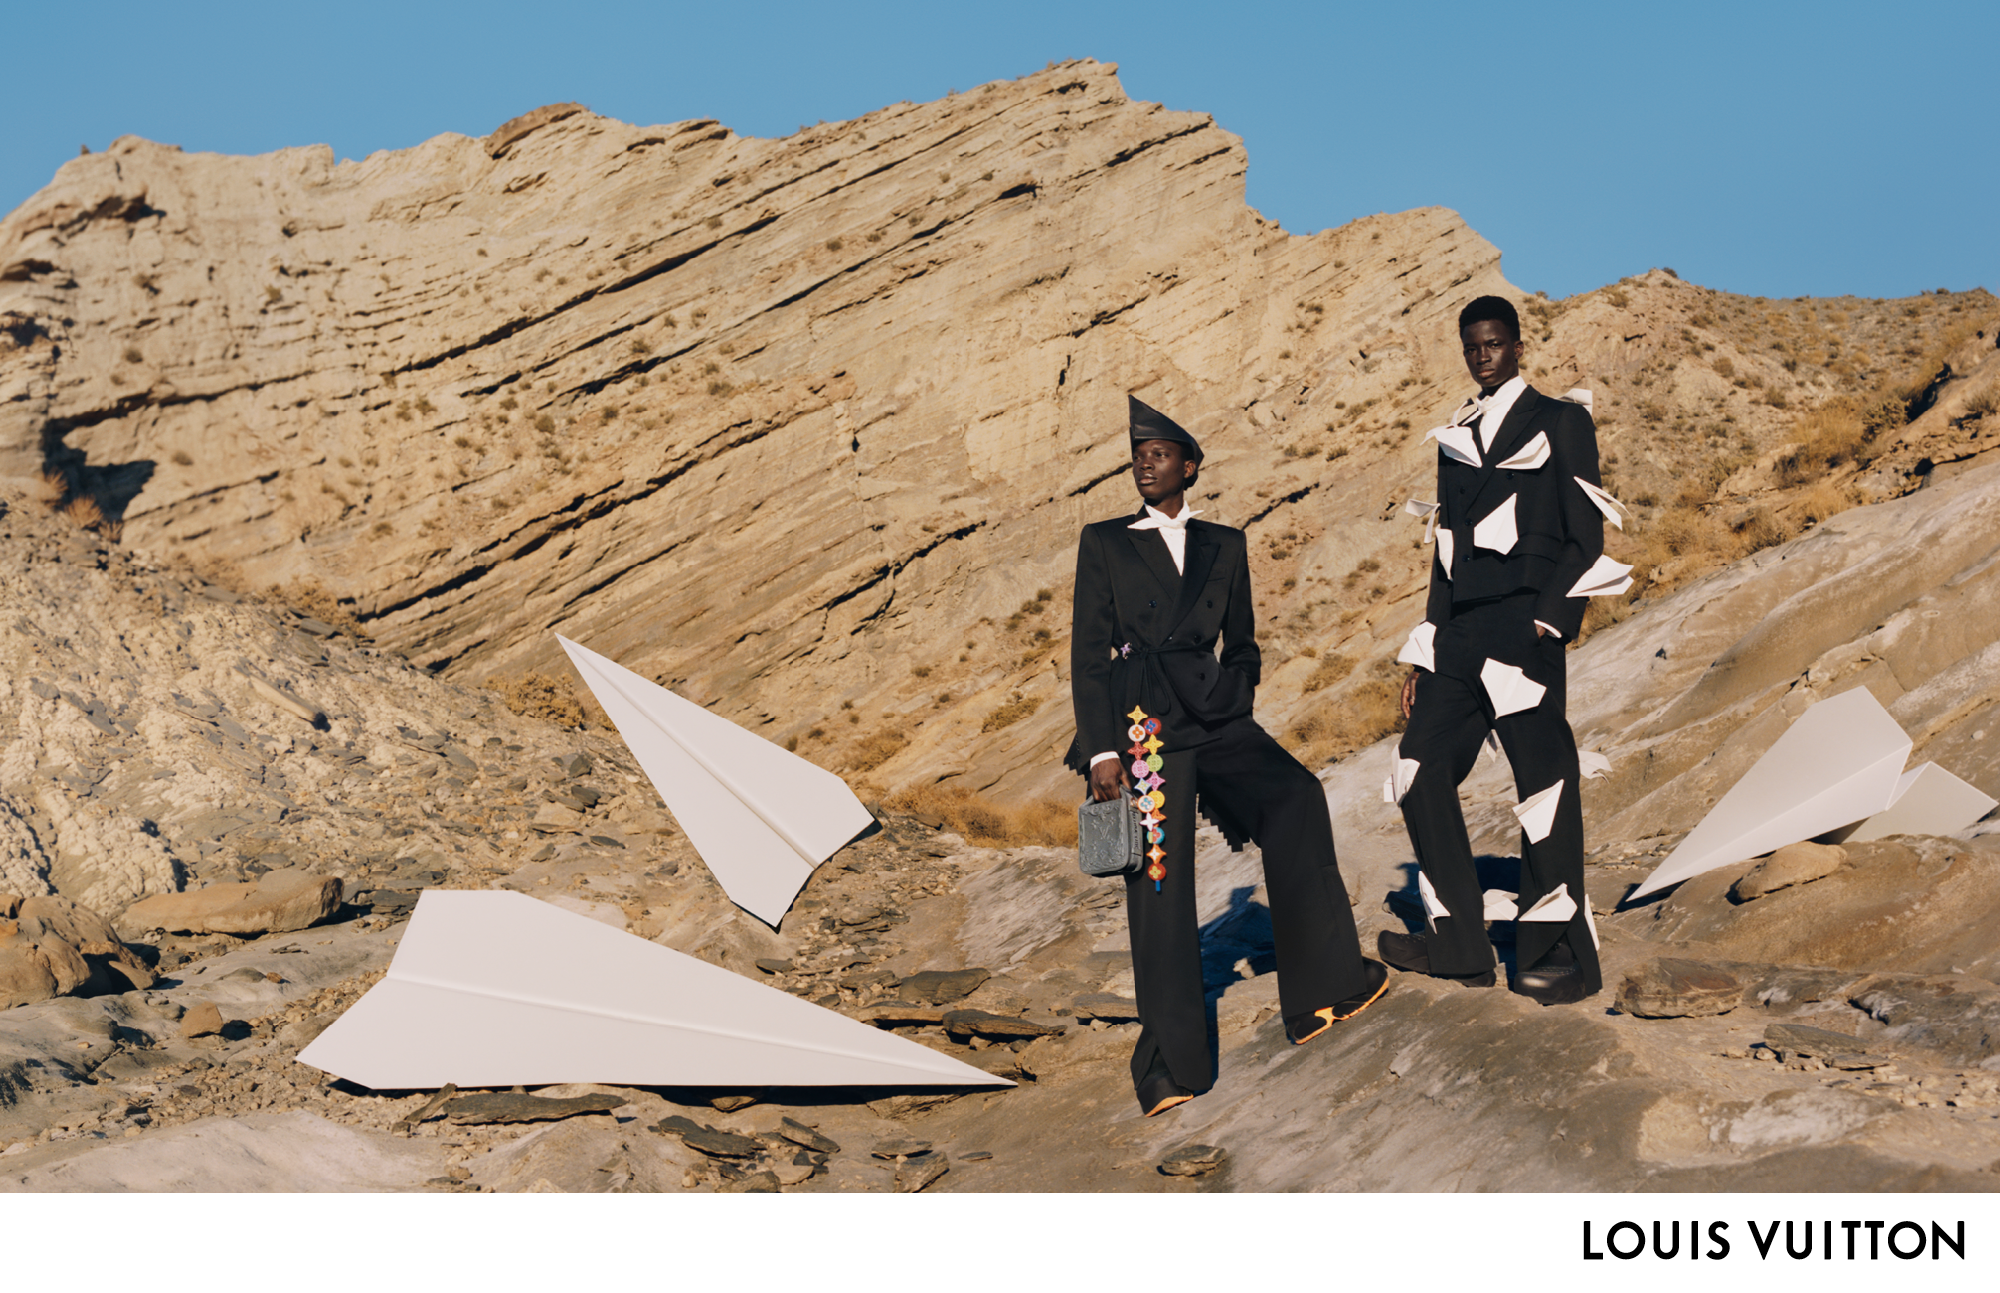 Louis Vuitton Brand Campaign II France - Be Good Studios